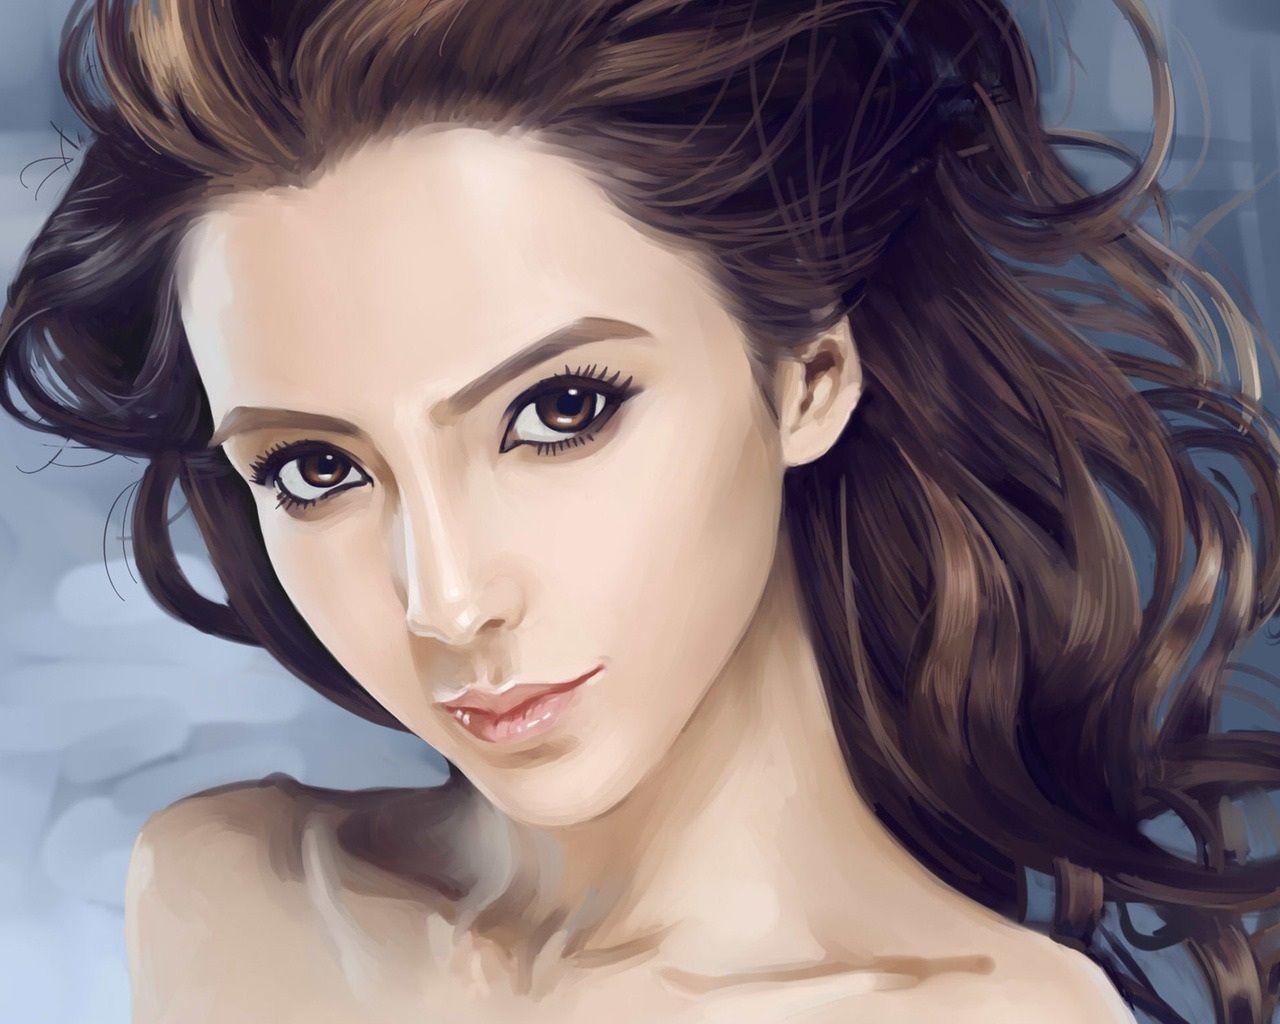 Beautiful Animated Girl Wallpaper 1440×900 Wallpaper Of